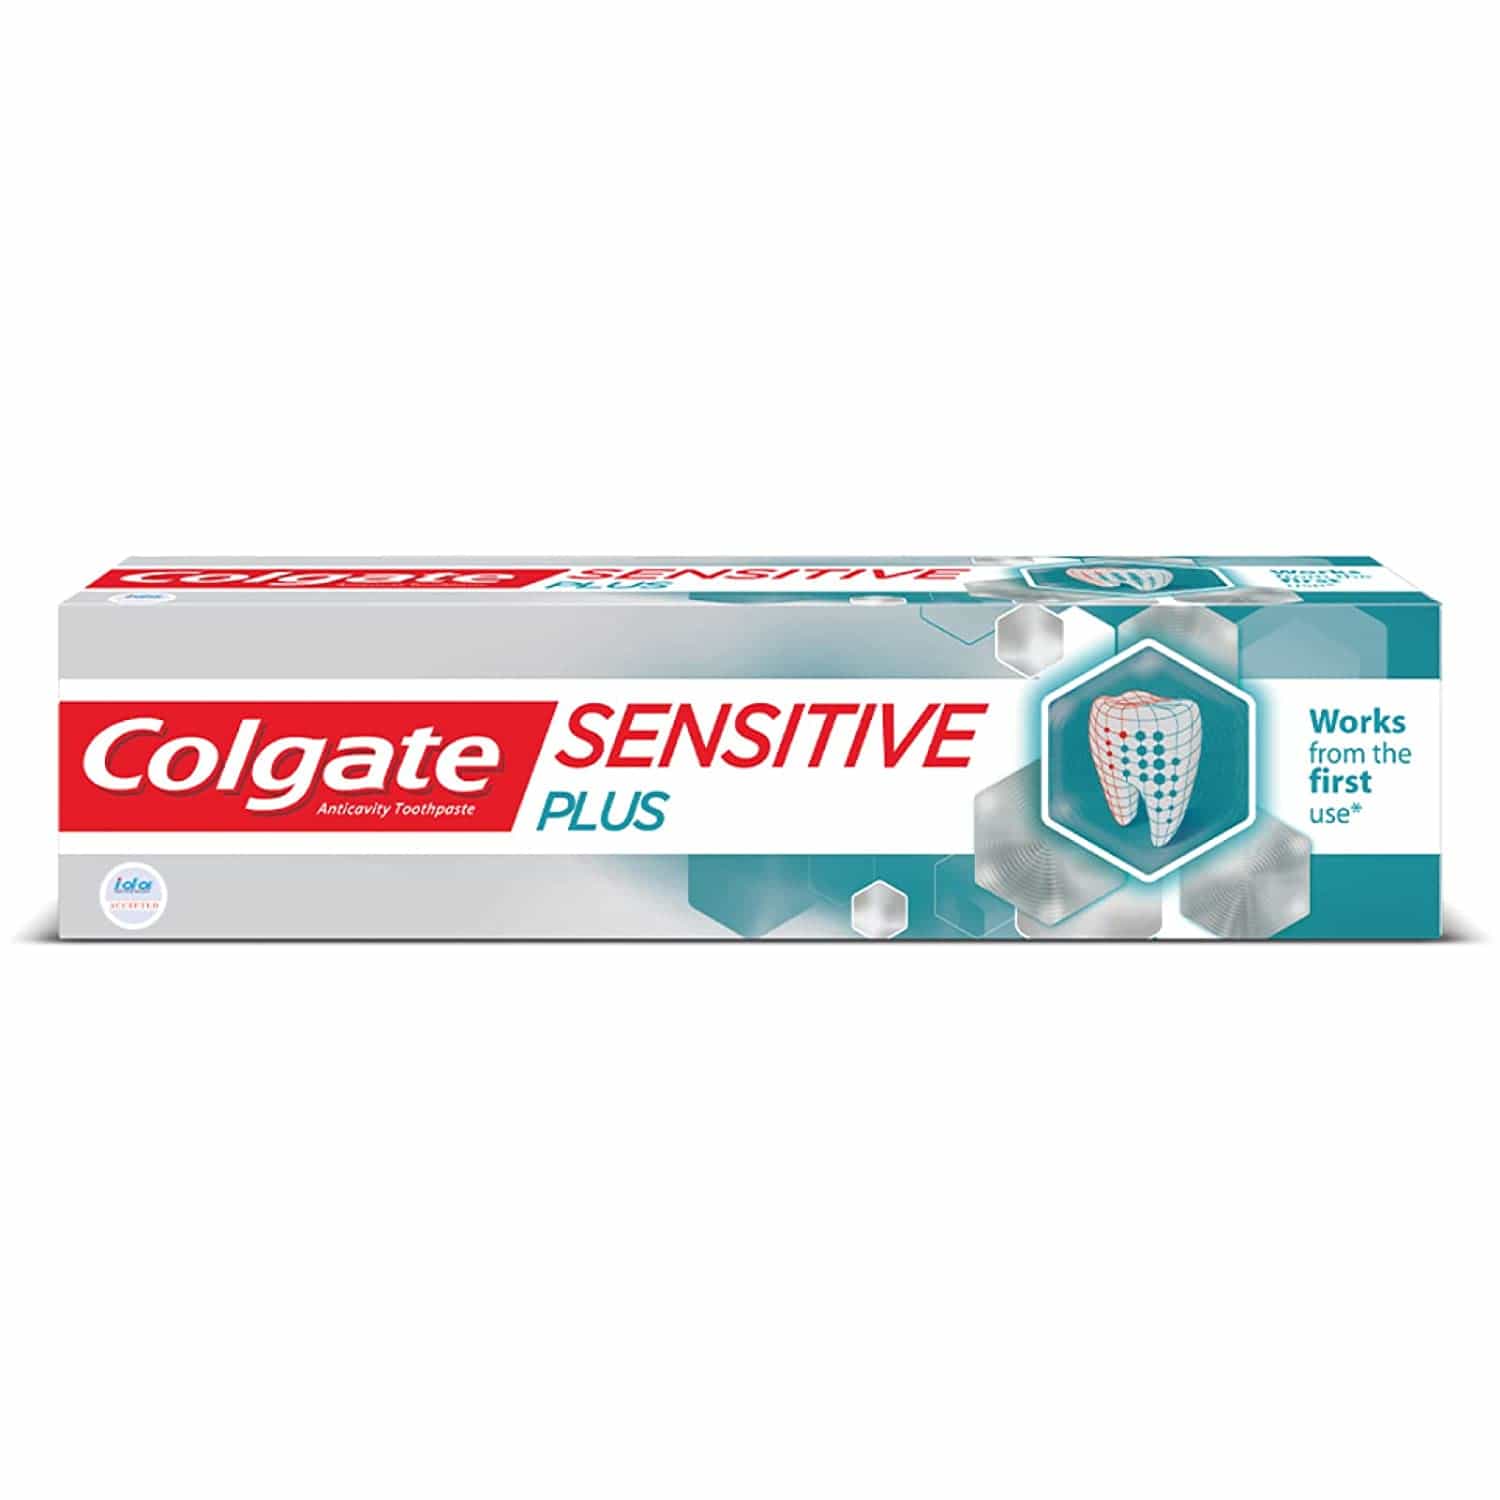 Package of Colgate Sensitive Plus toothpaste